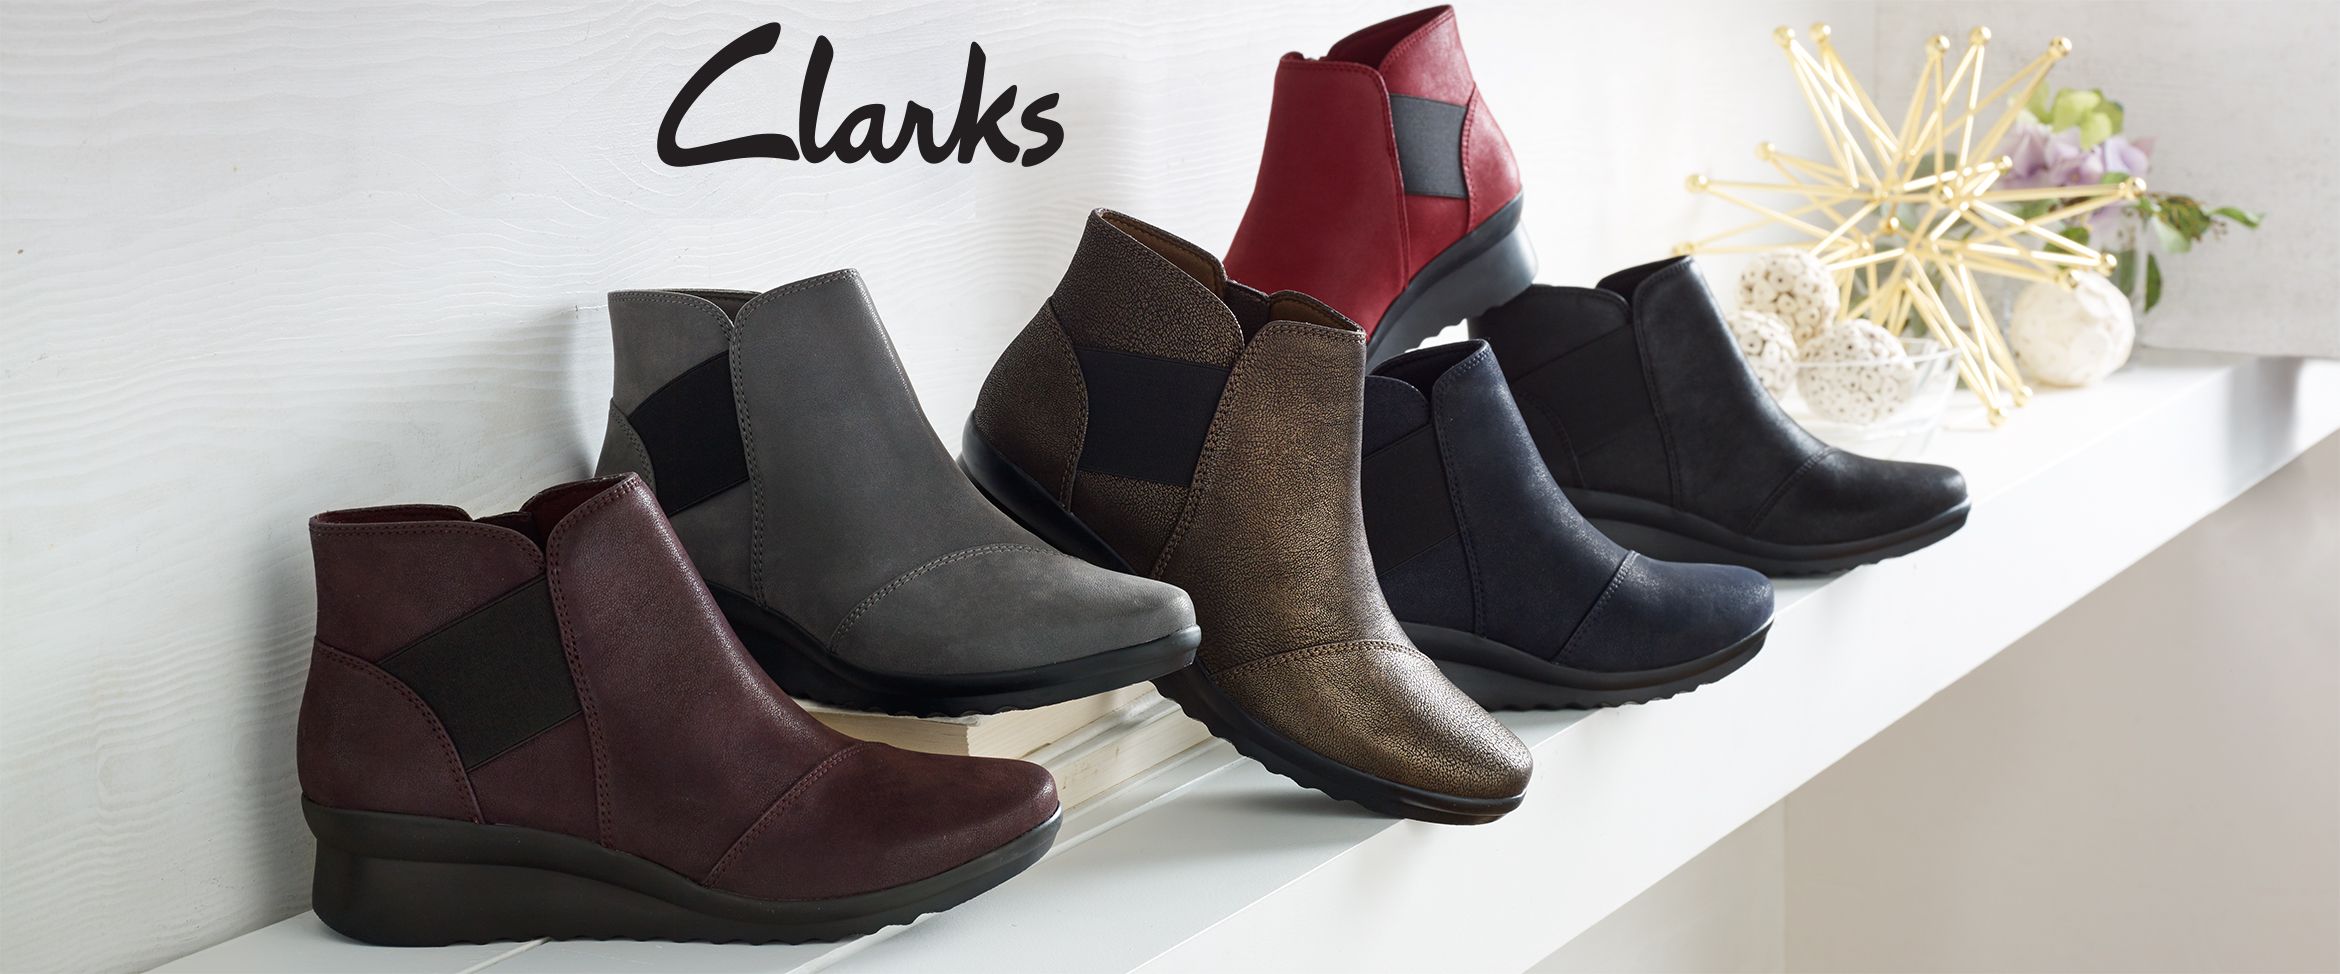 clarks cloudstepper boots